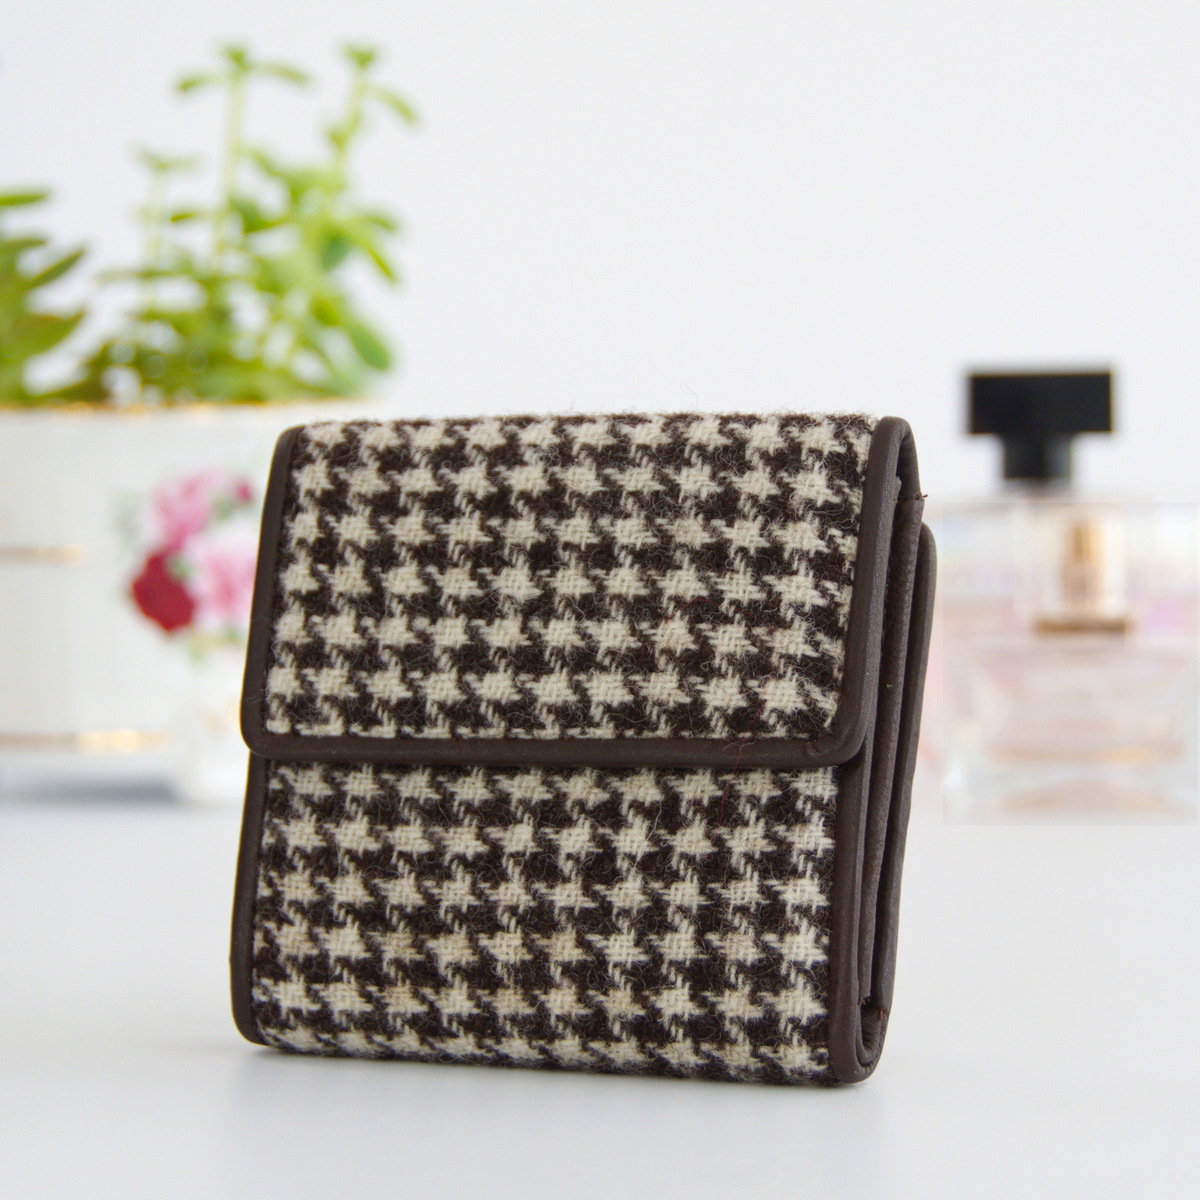 Stylish female leather handbag and small purse Vector Image